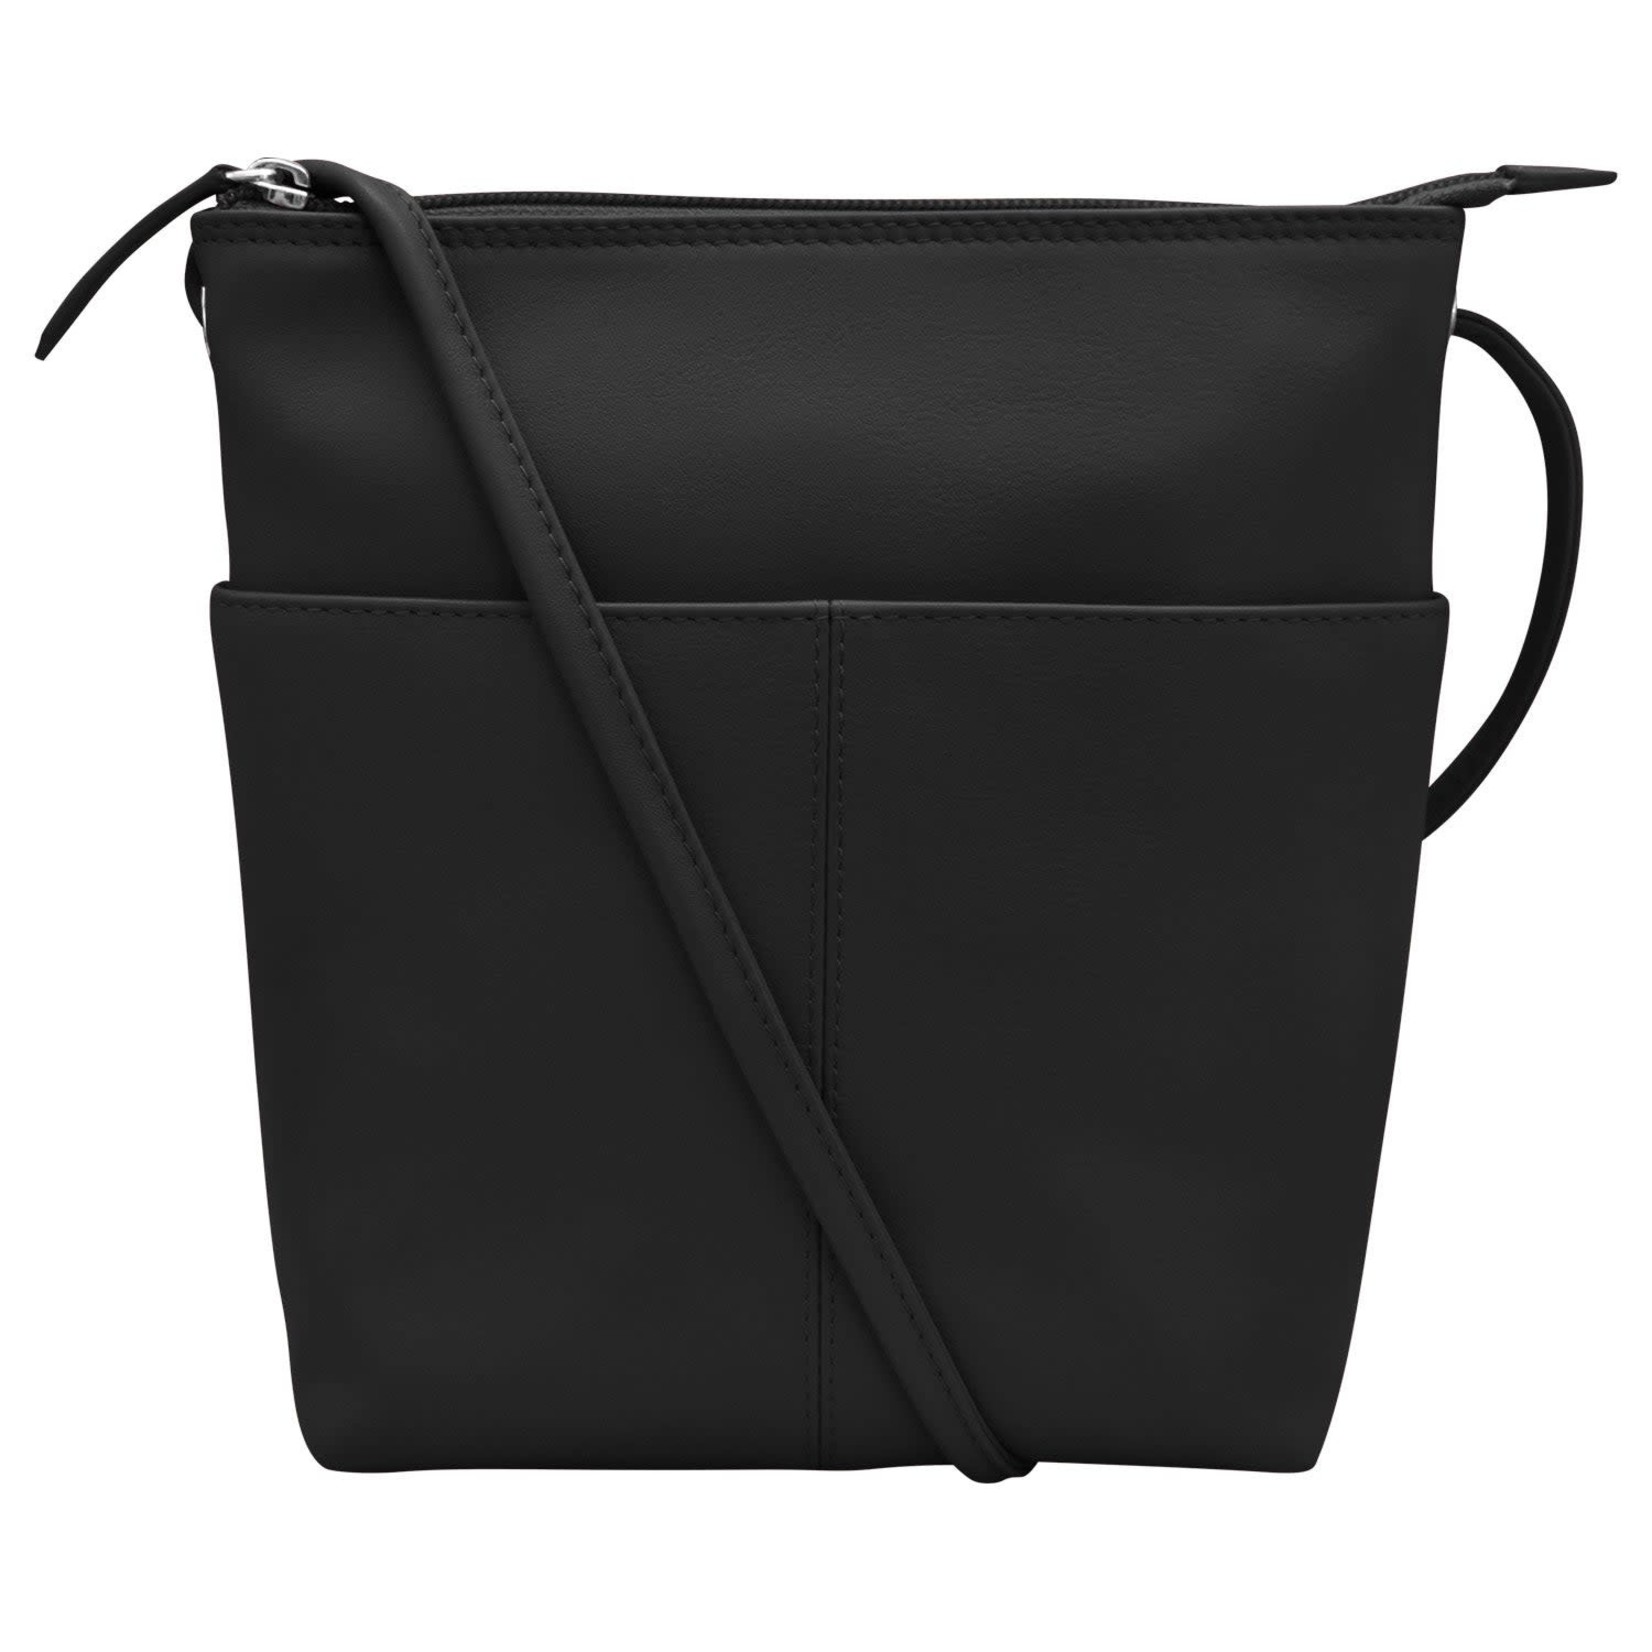 Leather Handbags and Accessories 6661 Black - Midi Sac